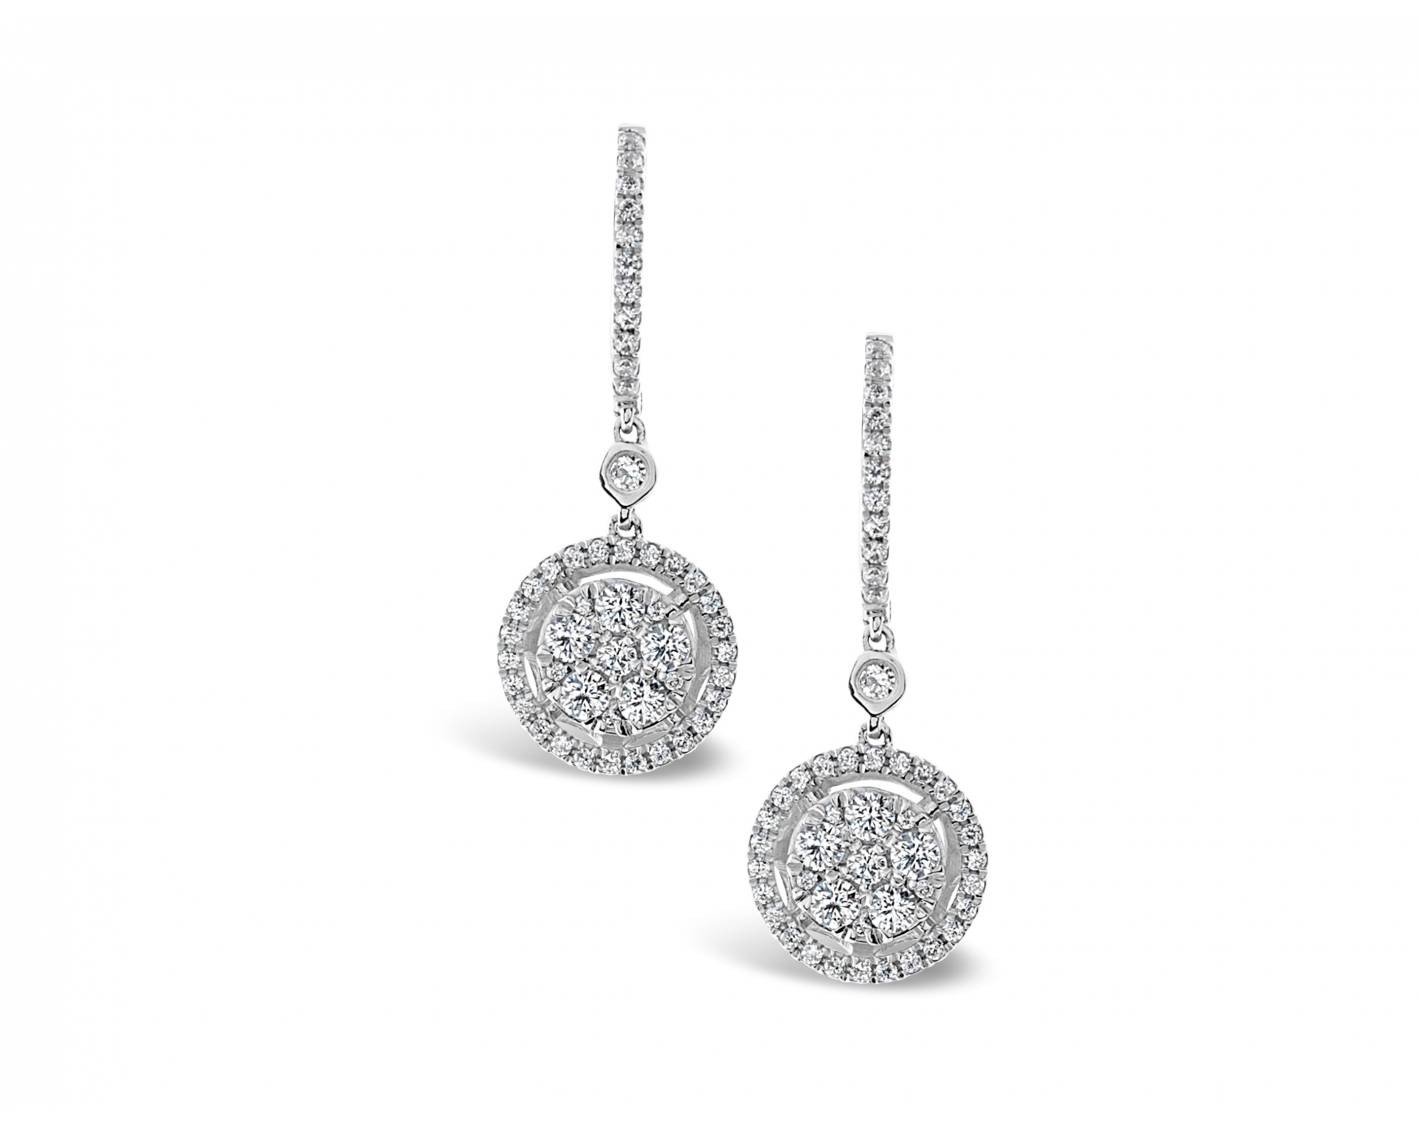 18k rose gold halo illusion set diamond earrings with upstones Photos & images